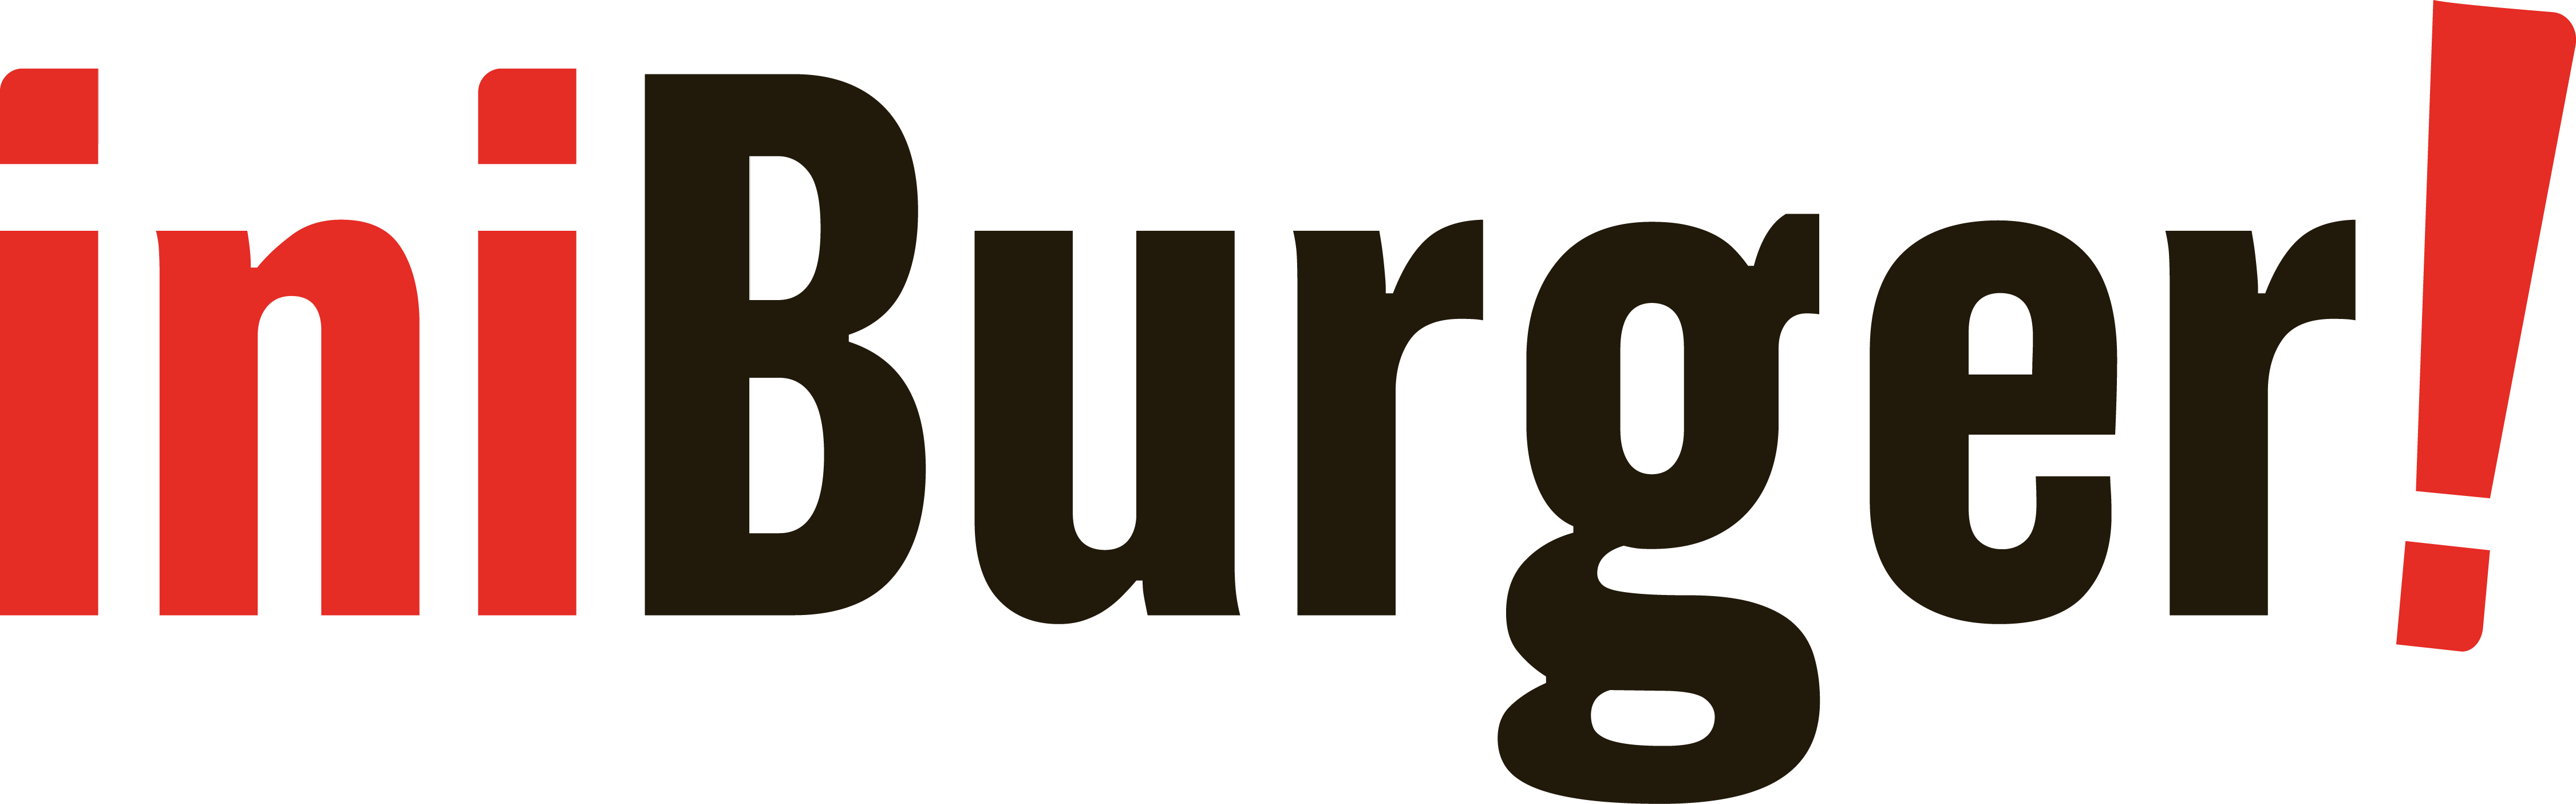 iniBurger Logo Color-large.png